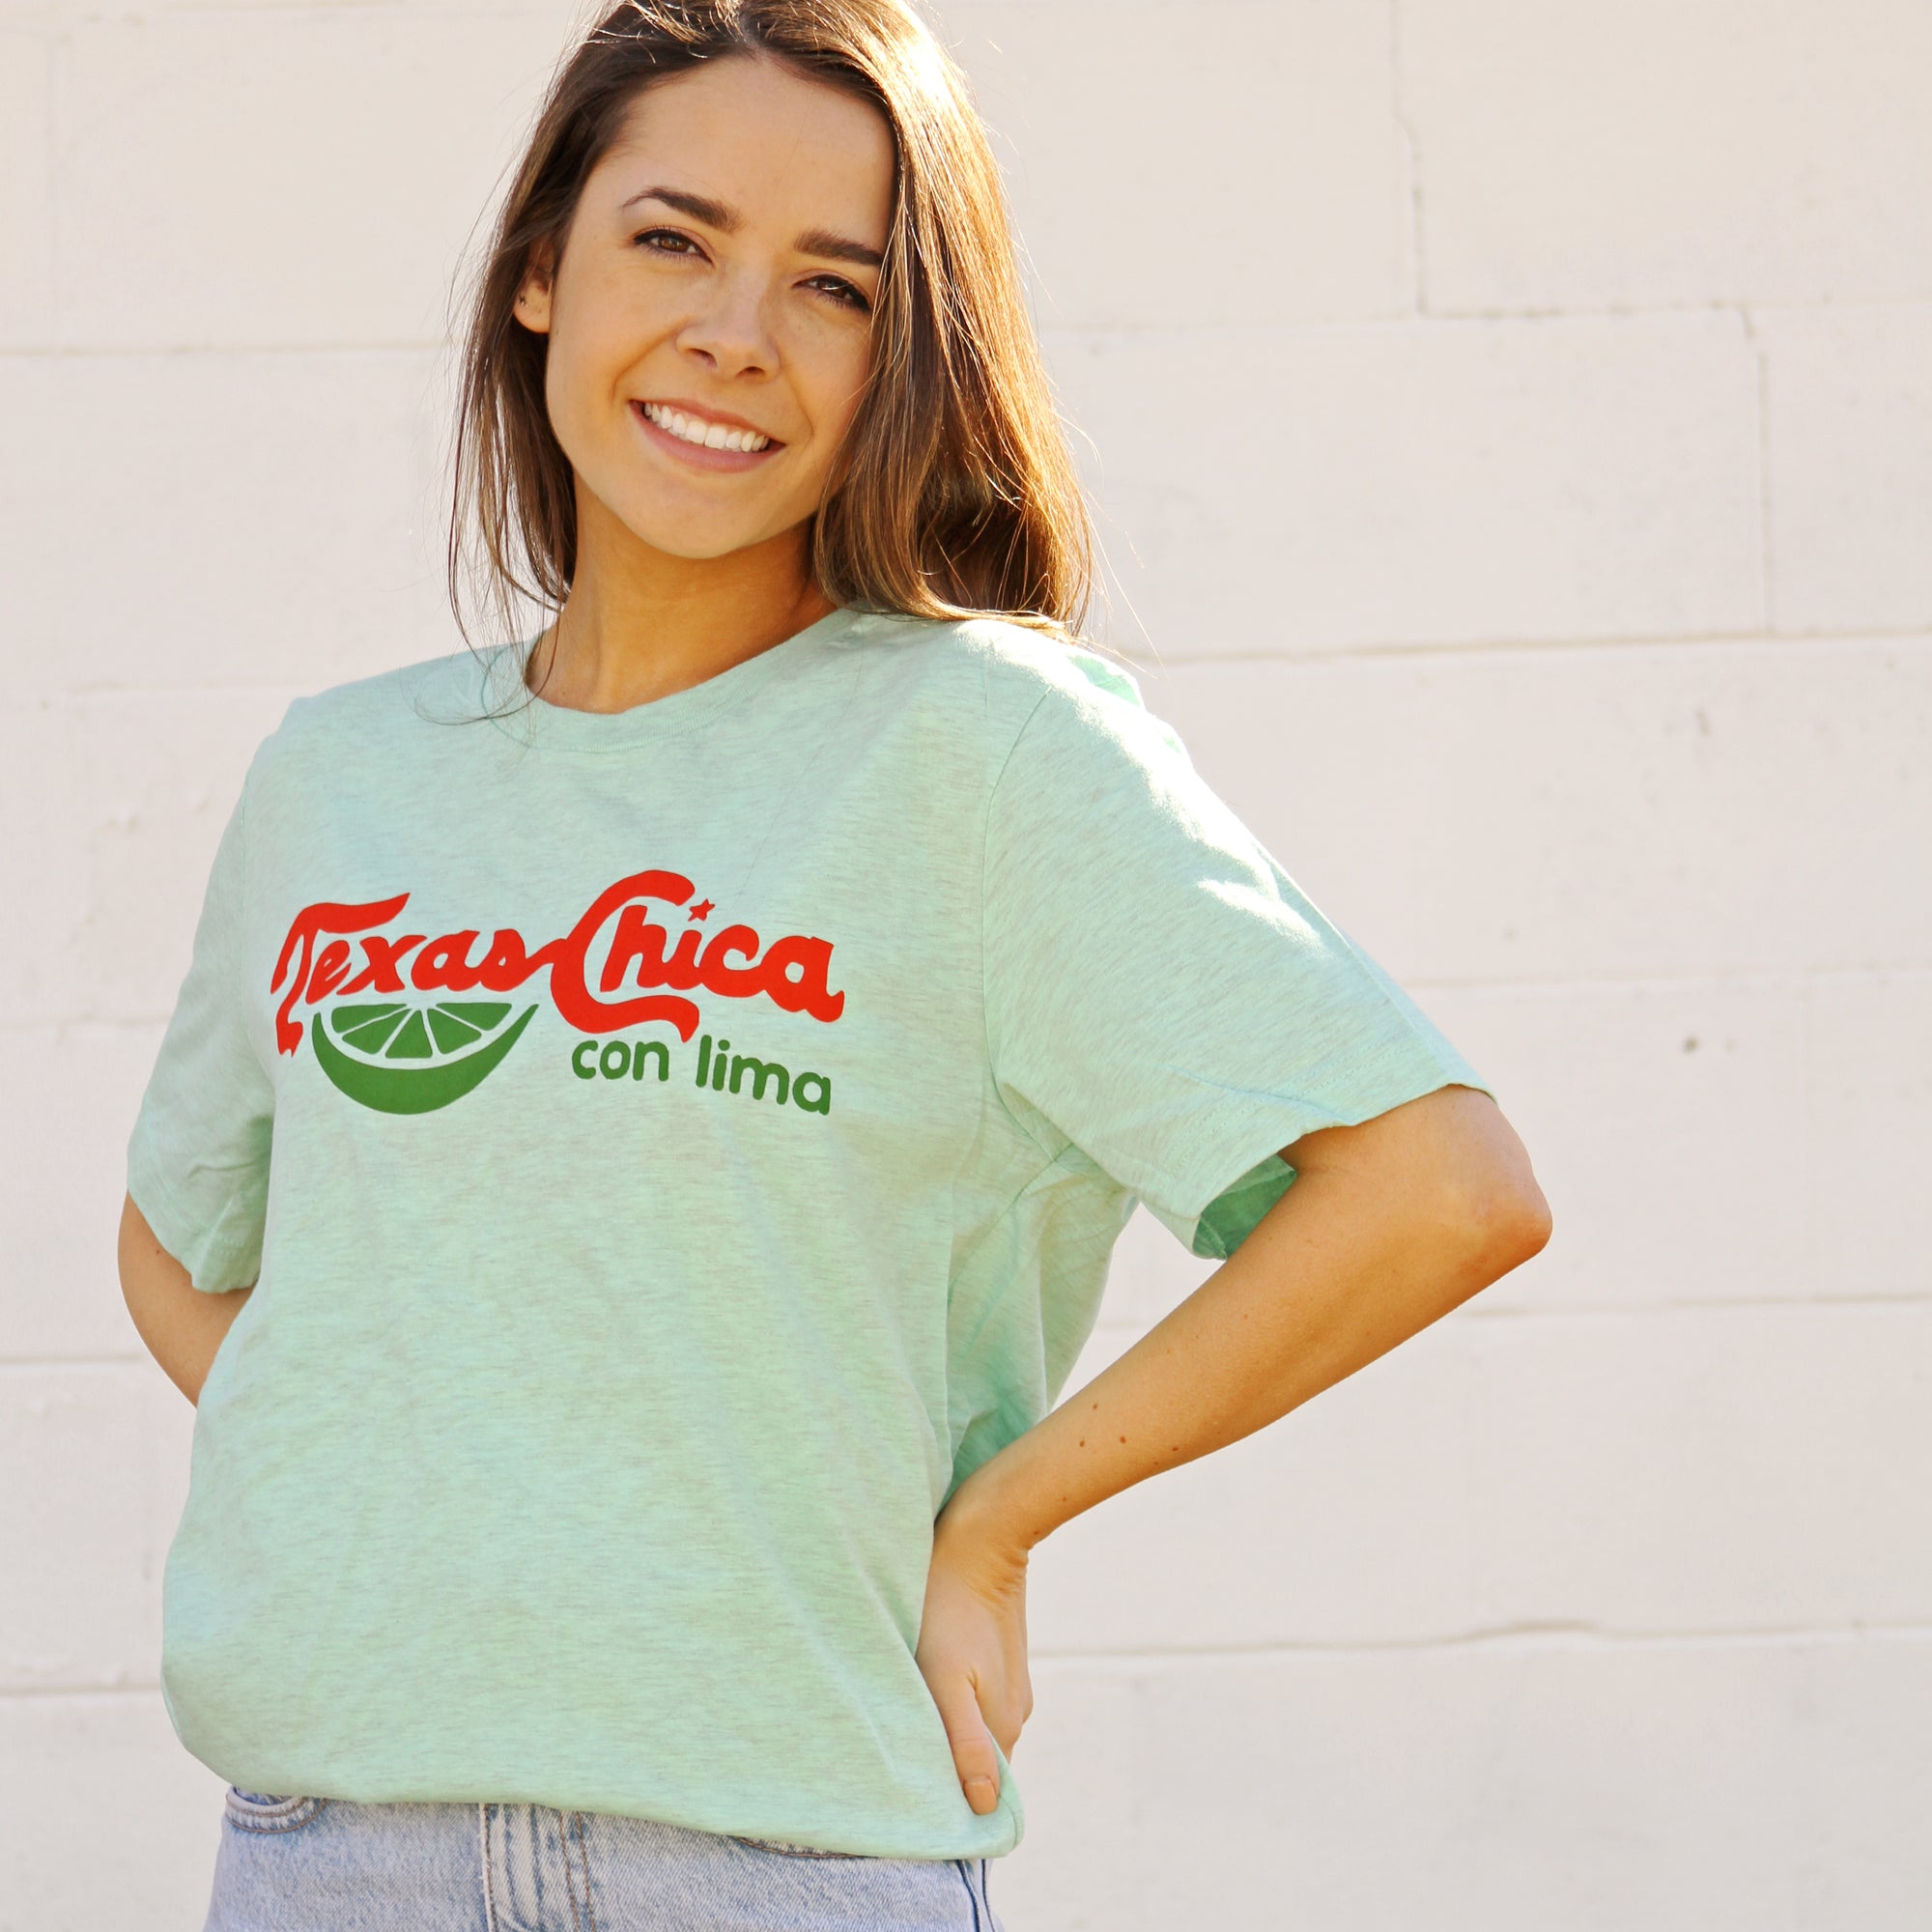 Texas Chica Con Lima T-Shirt